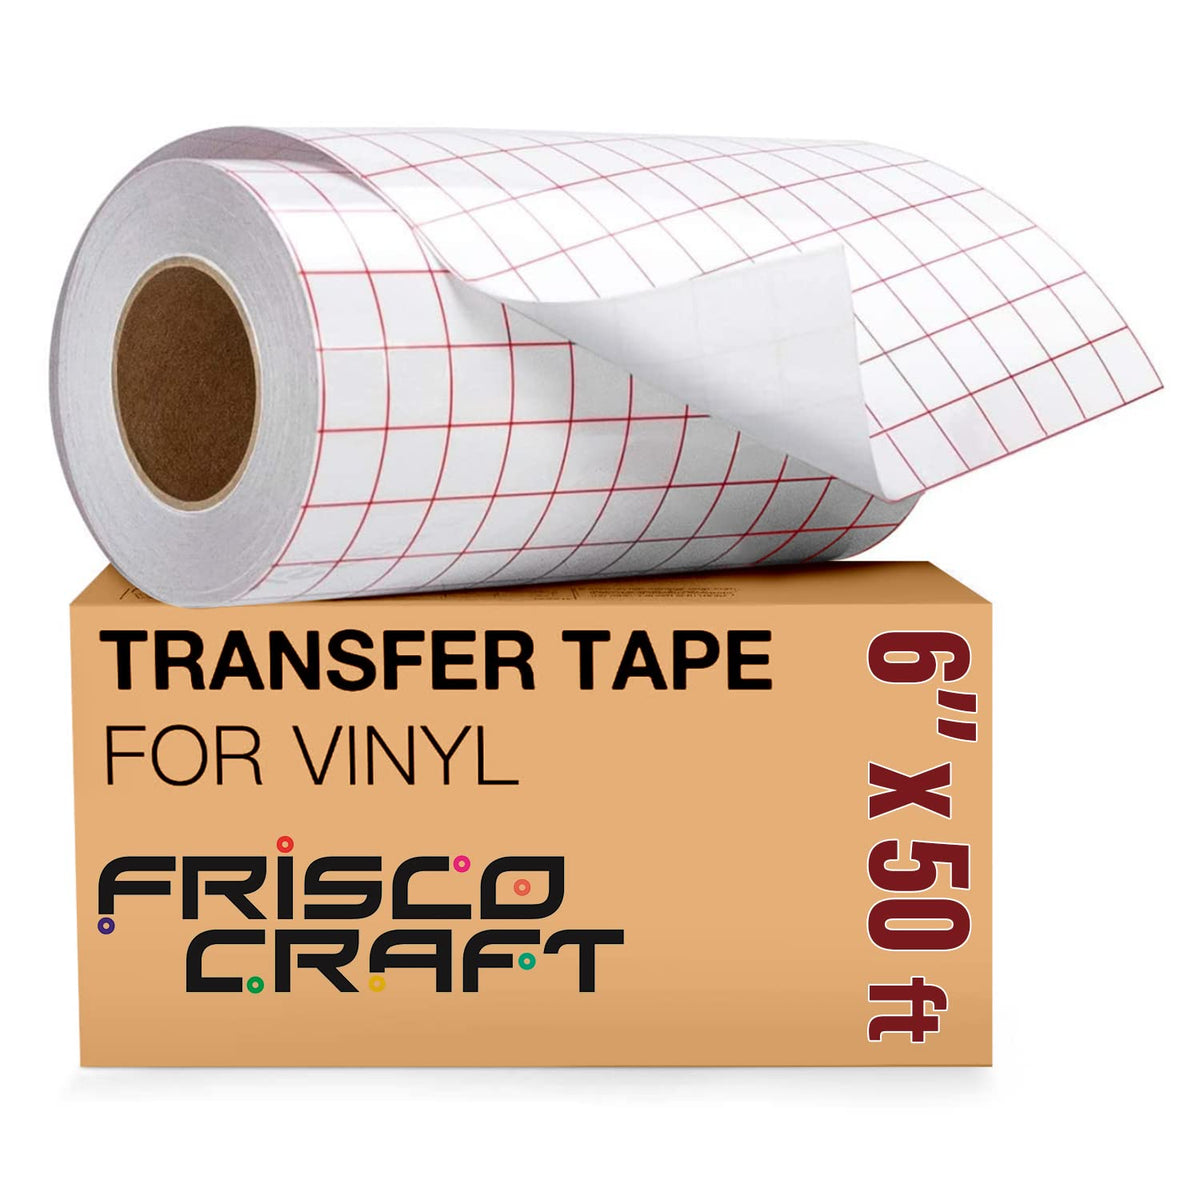 Gridded Oracal Transfer Tape - 3 Pack